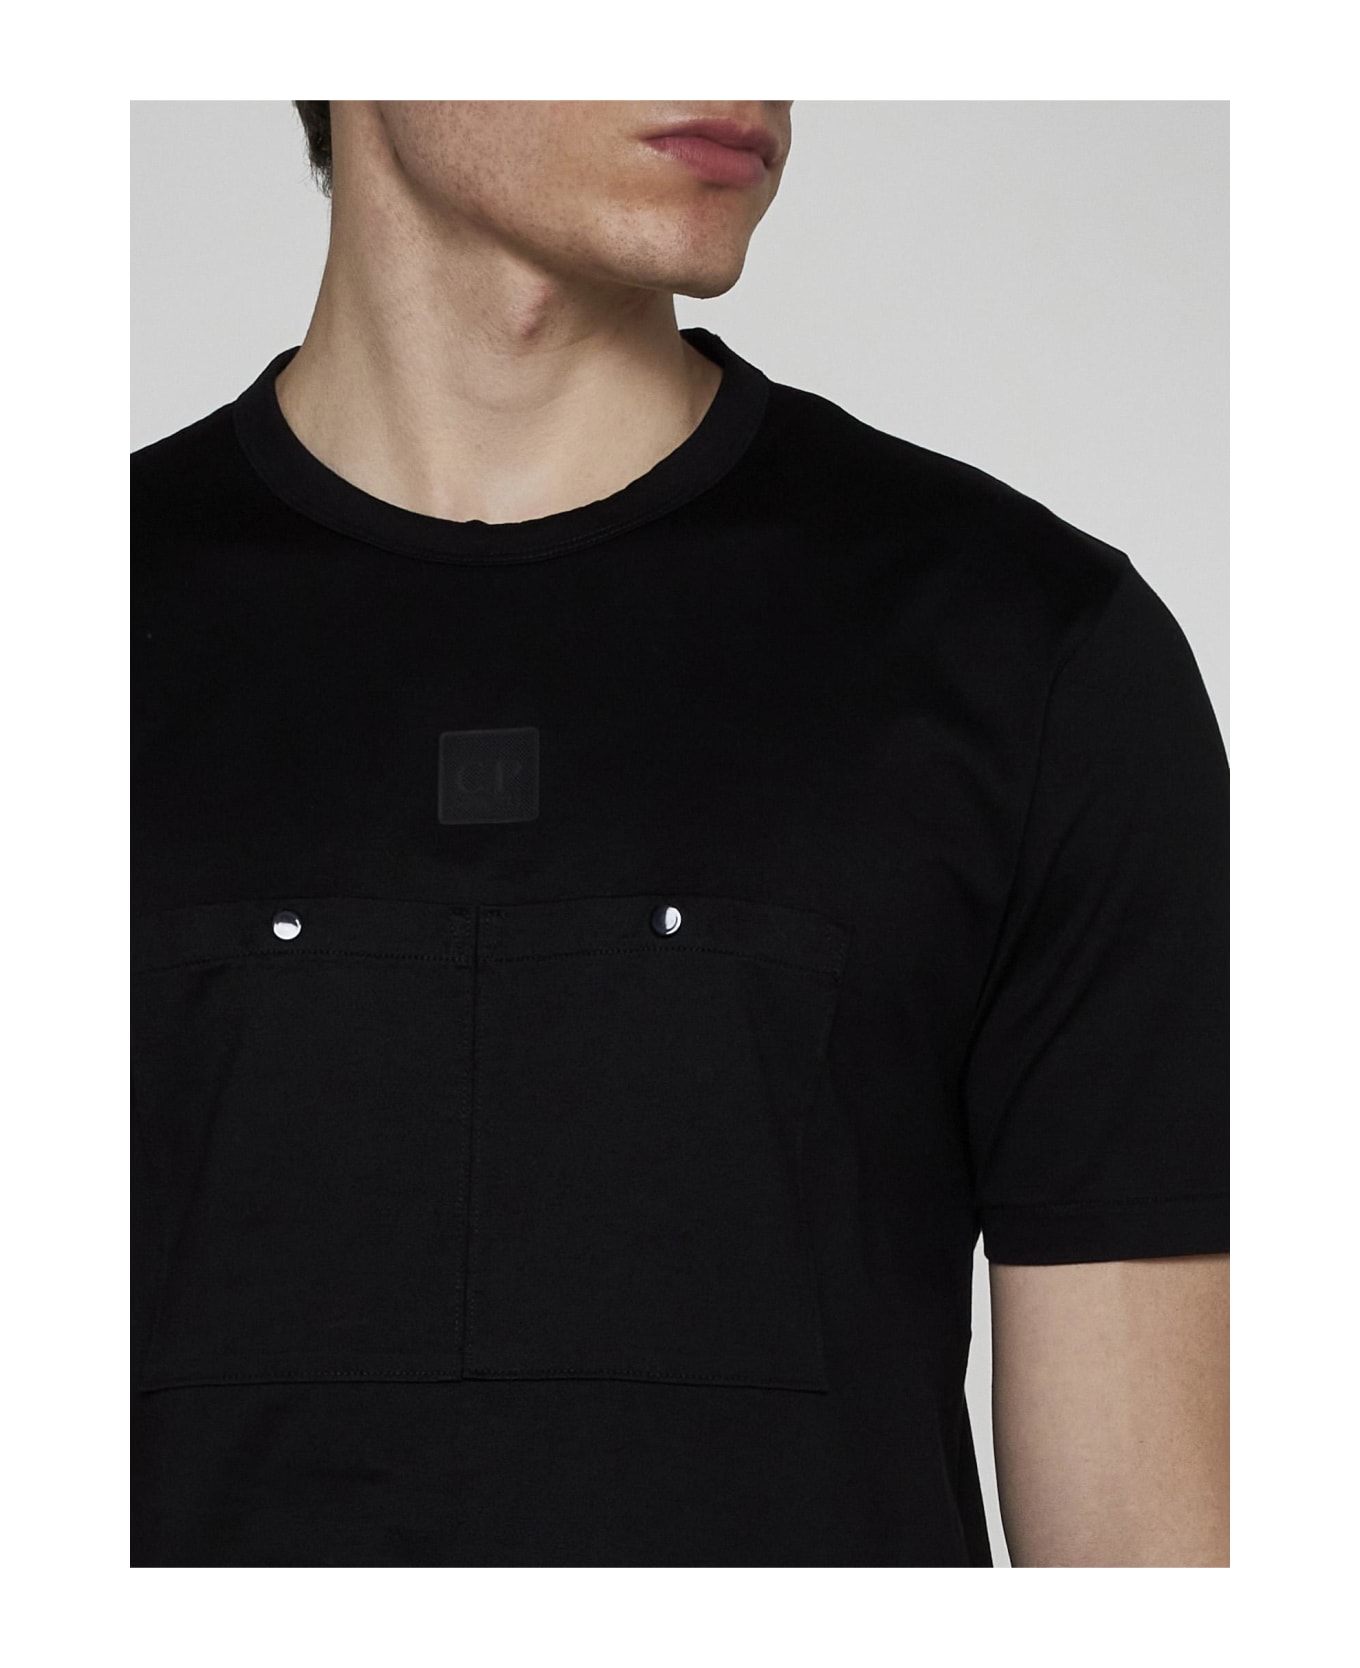 C.P. Company Logo And Pockets Cotton T-shirt - Black